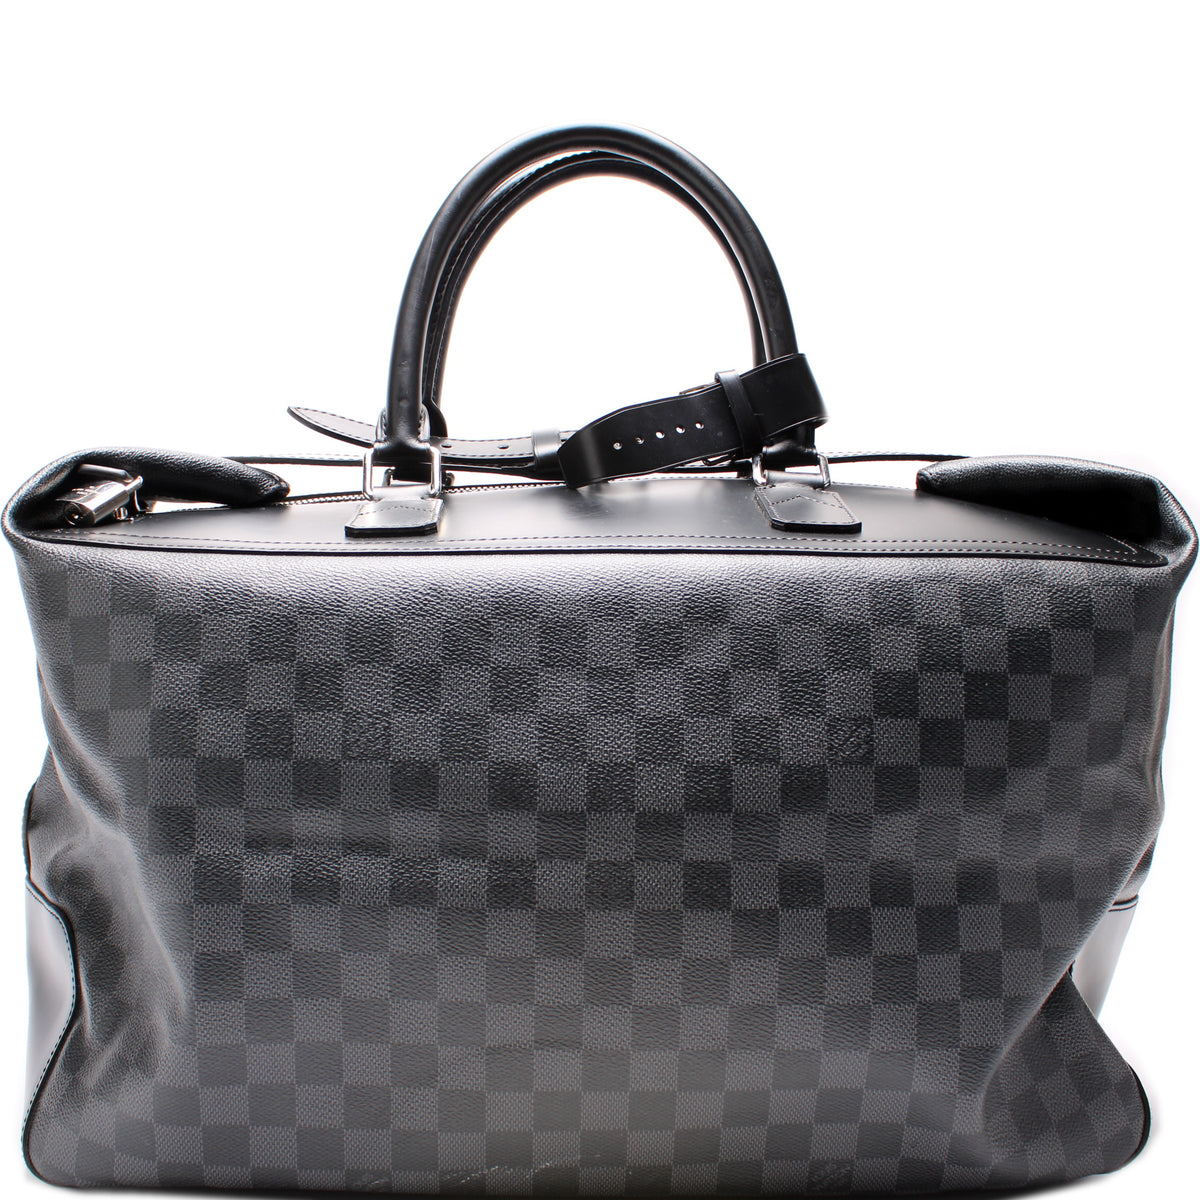 Louis Vuitton, Bags, Authentic Louis Vuitton Neo Kendall In Damier